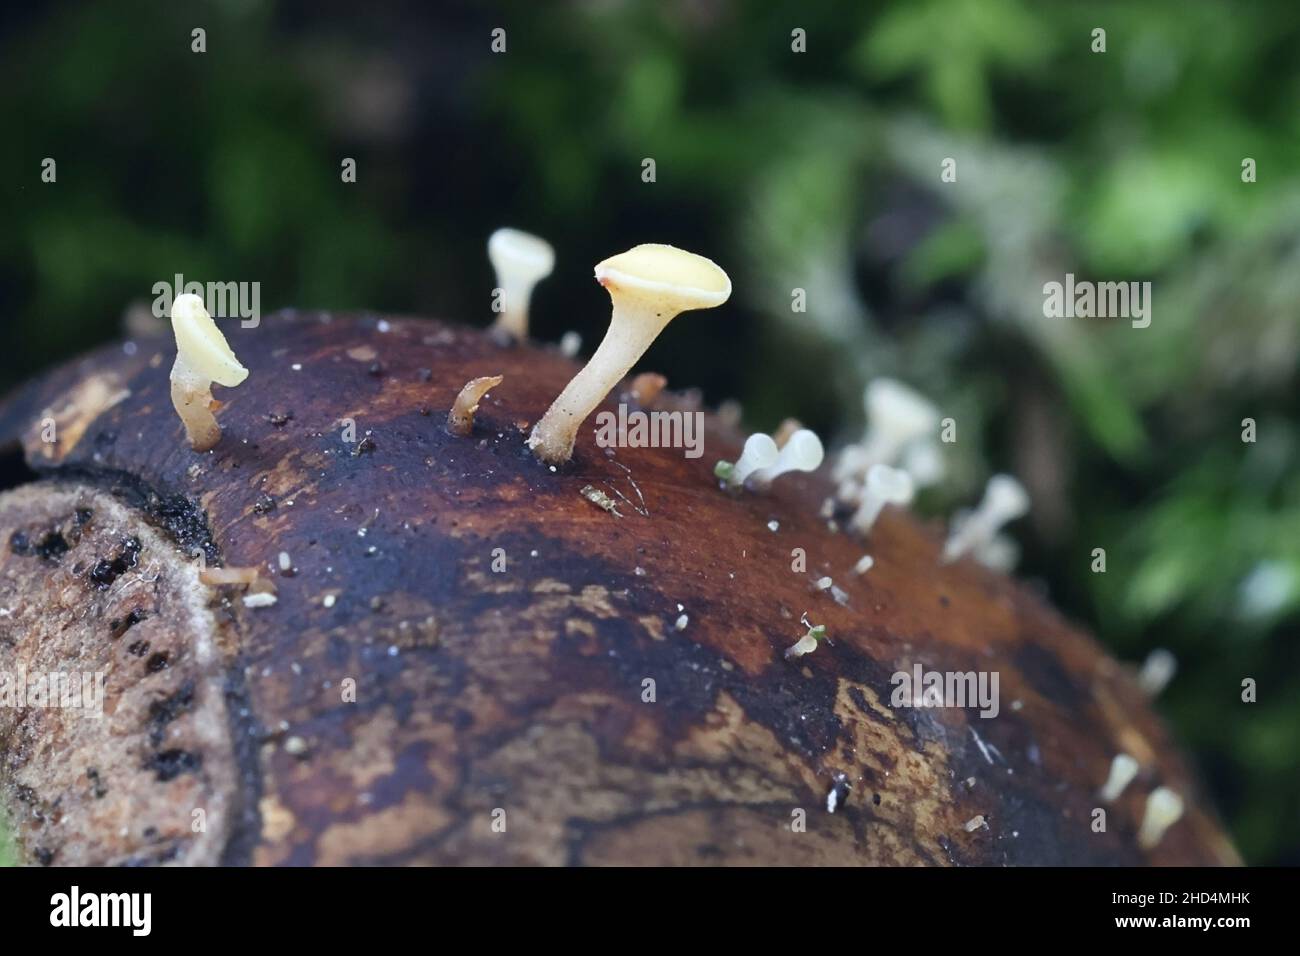 Hymenoscyphus fructigenus, commonly known as nut disco, wild fungus from Finland Stock Photo